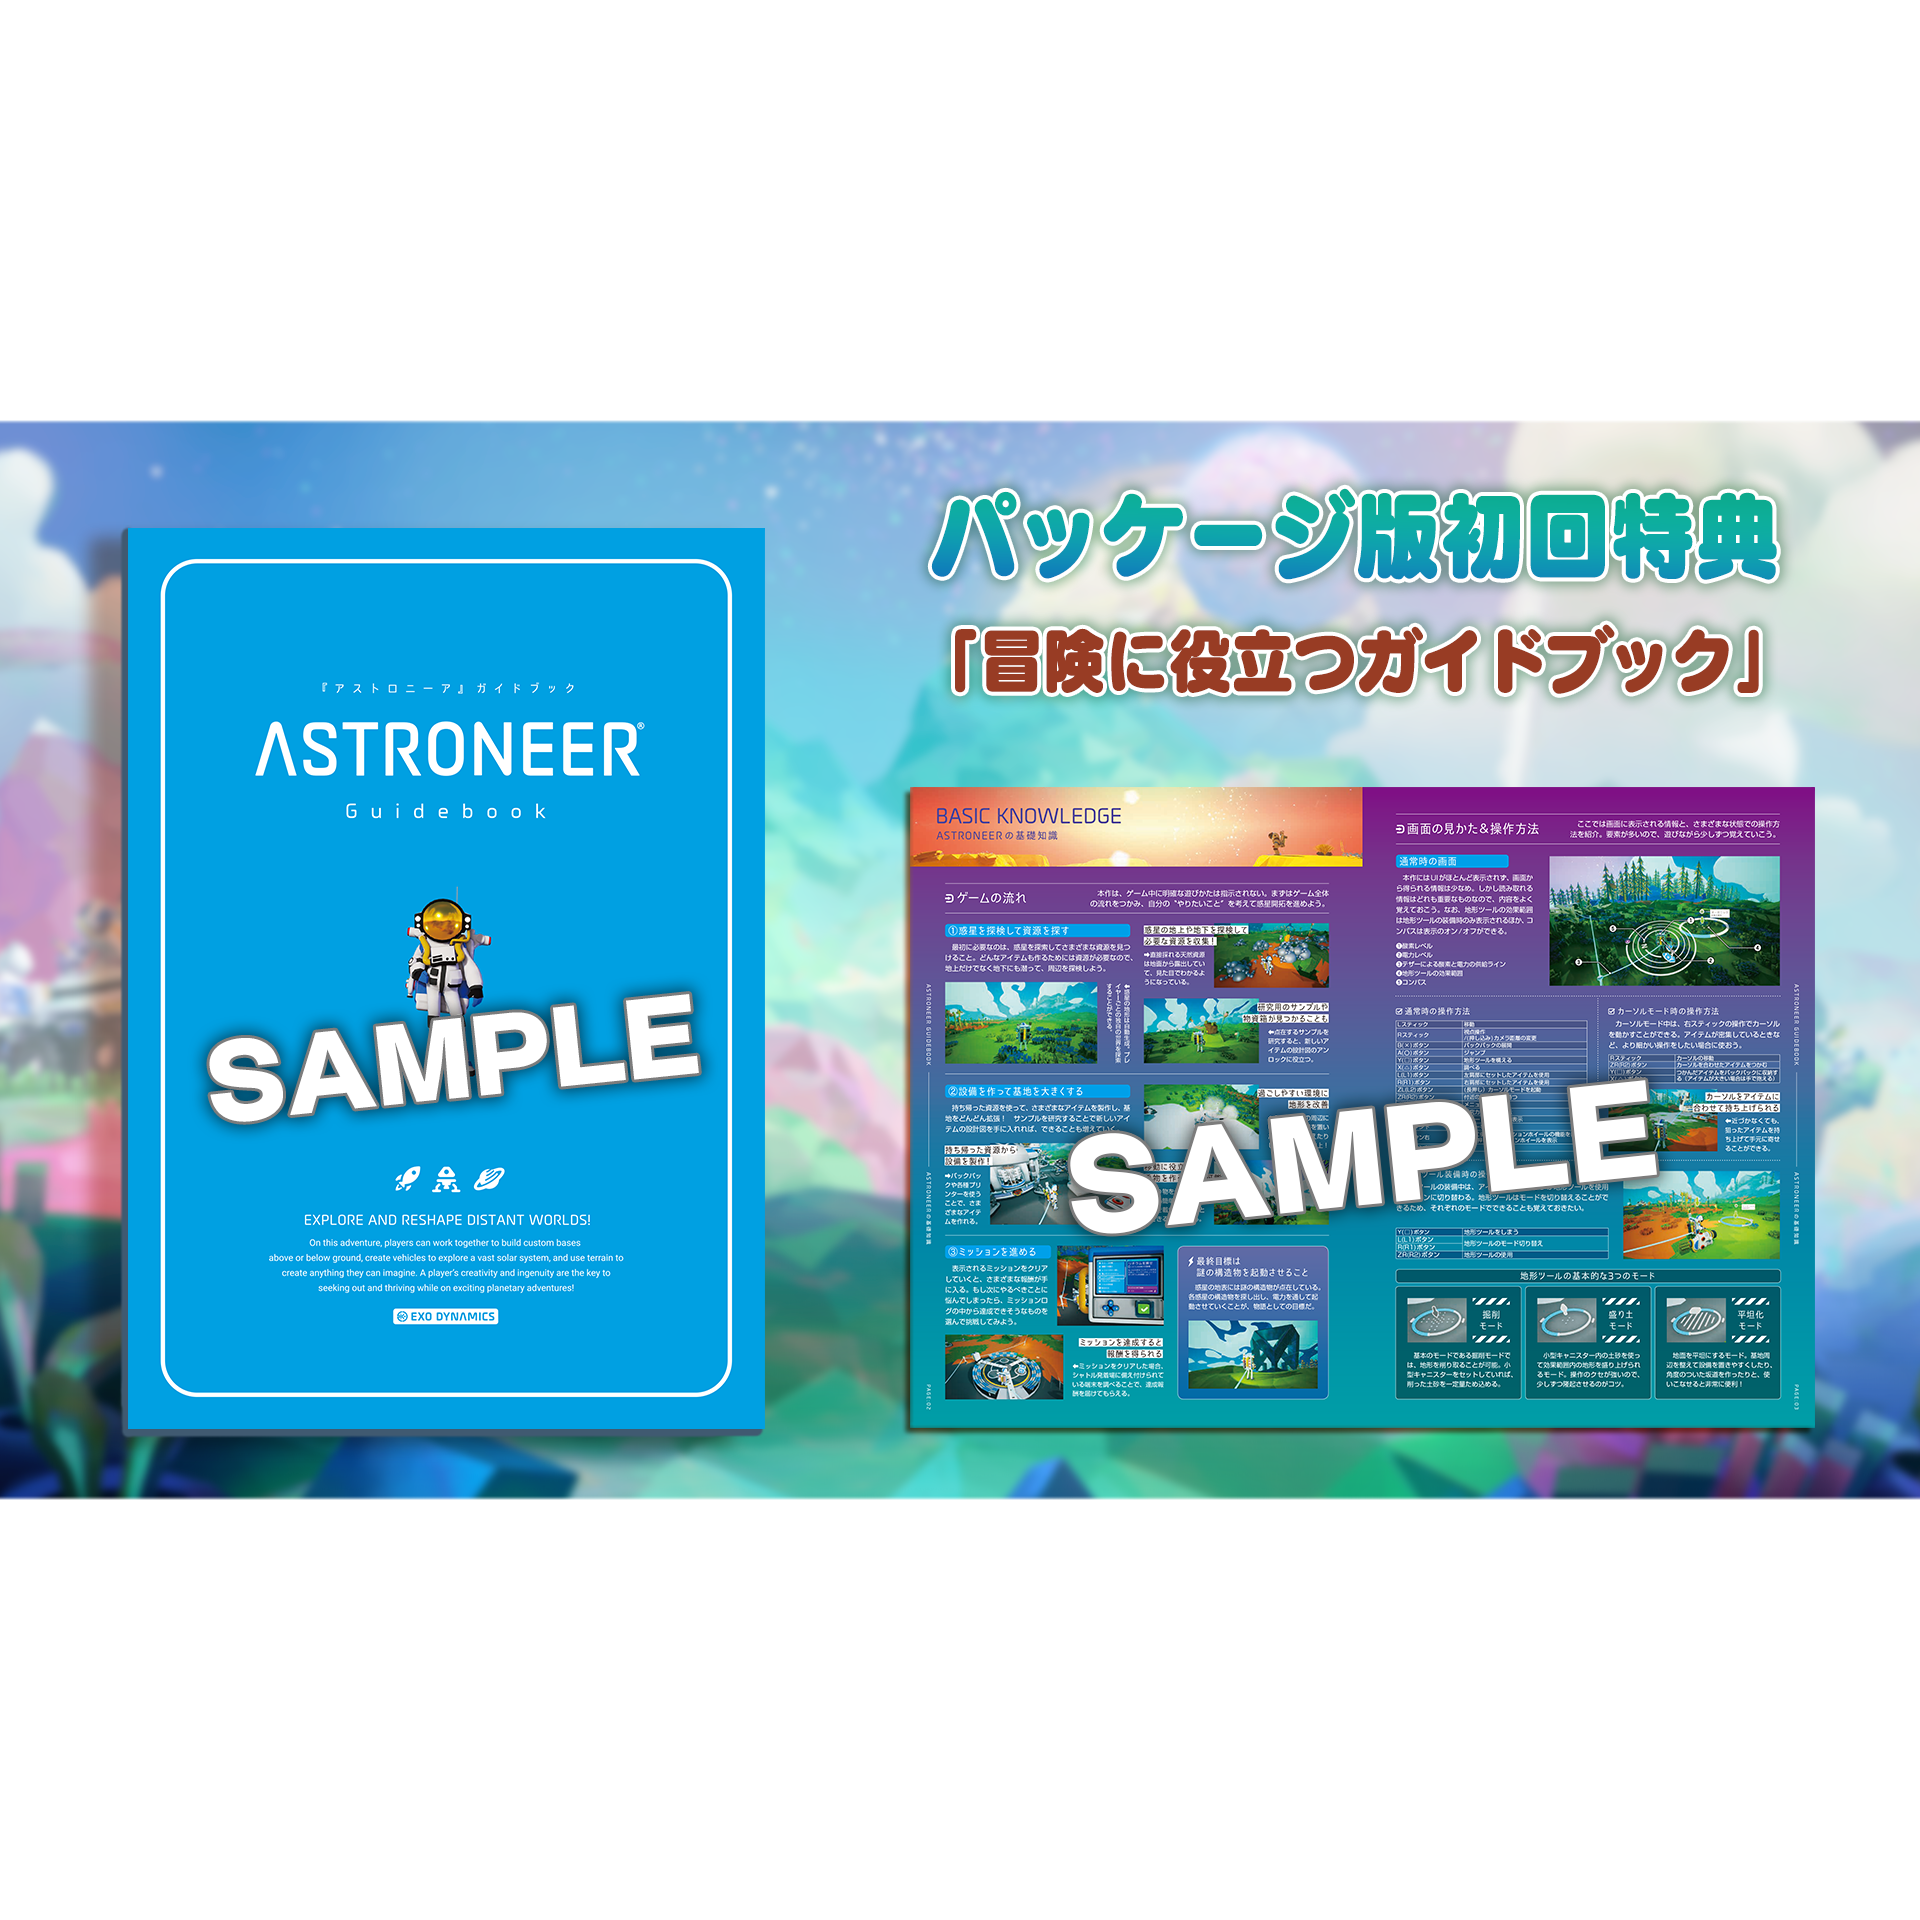 ASTRONEER -アストロニーア- [PS4] 初回特典付 (数量限定)(日本版)